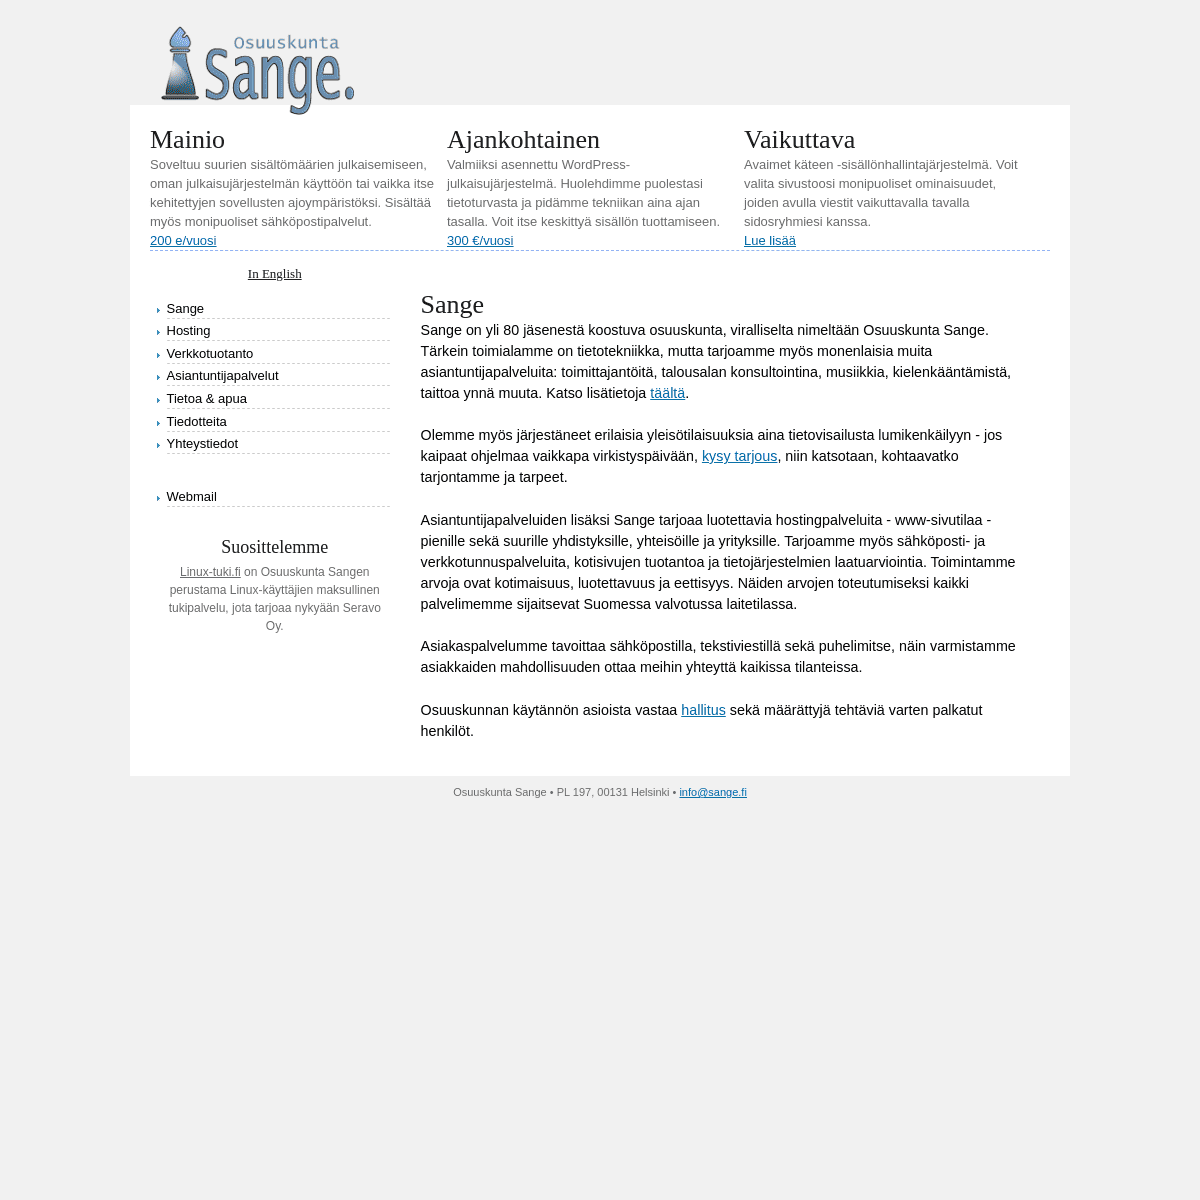 A complete backup of https://sange.fi